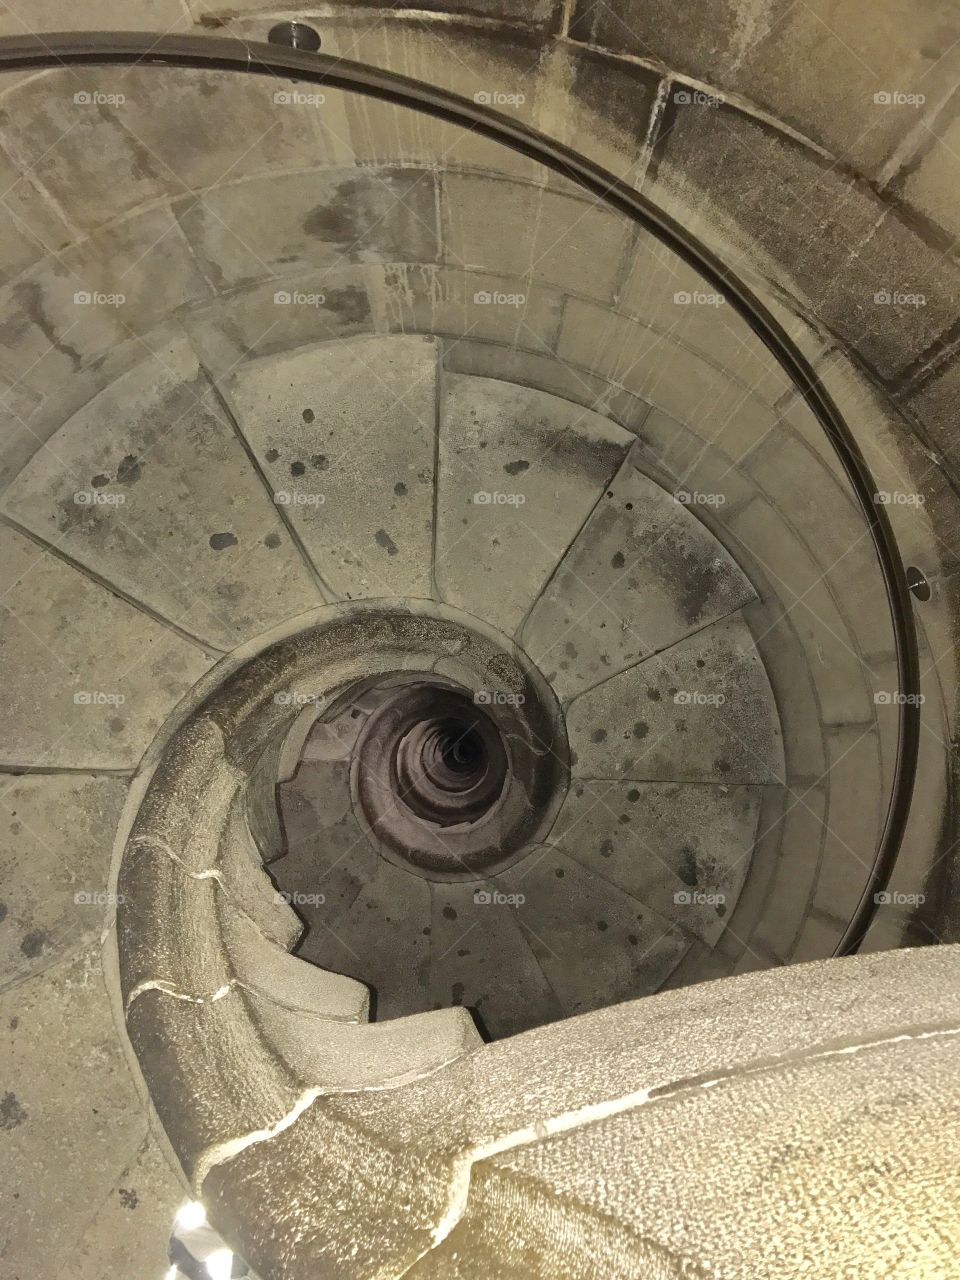 Stairs down at la sagrada familia in Barcelona 